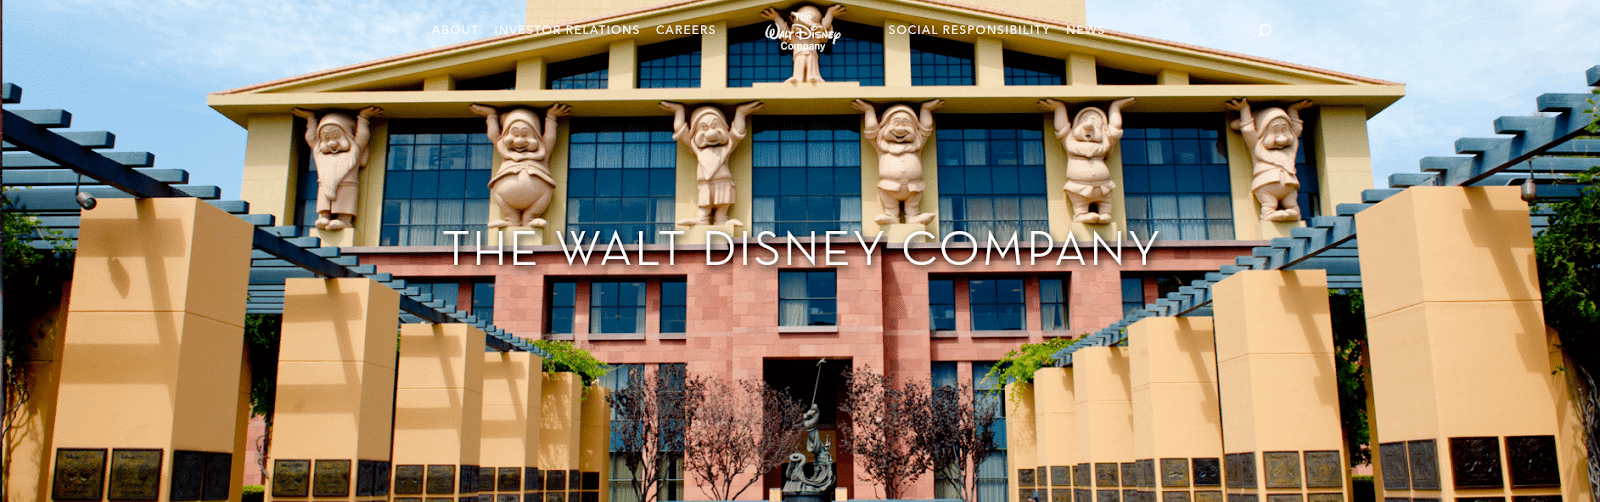 Walt Disney homepage screenshot.